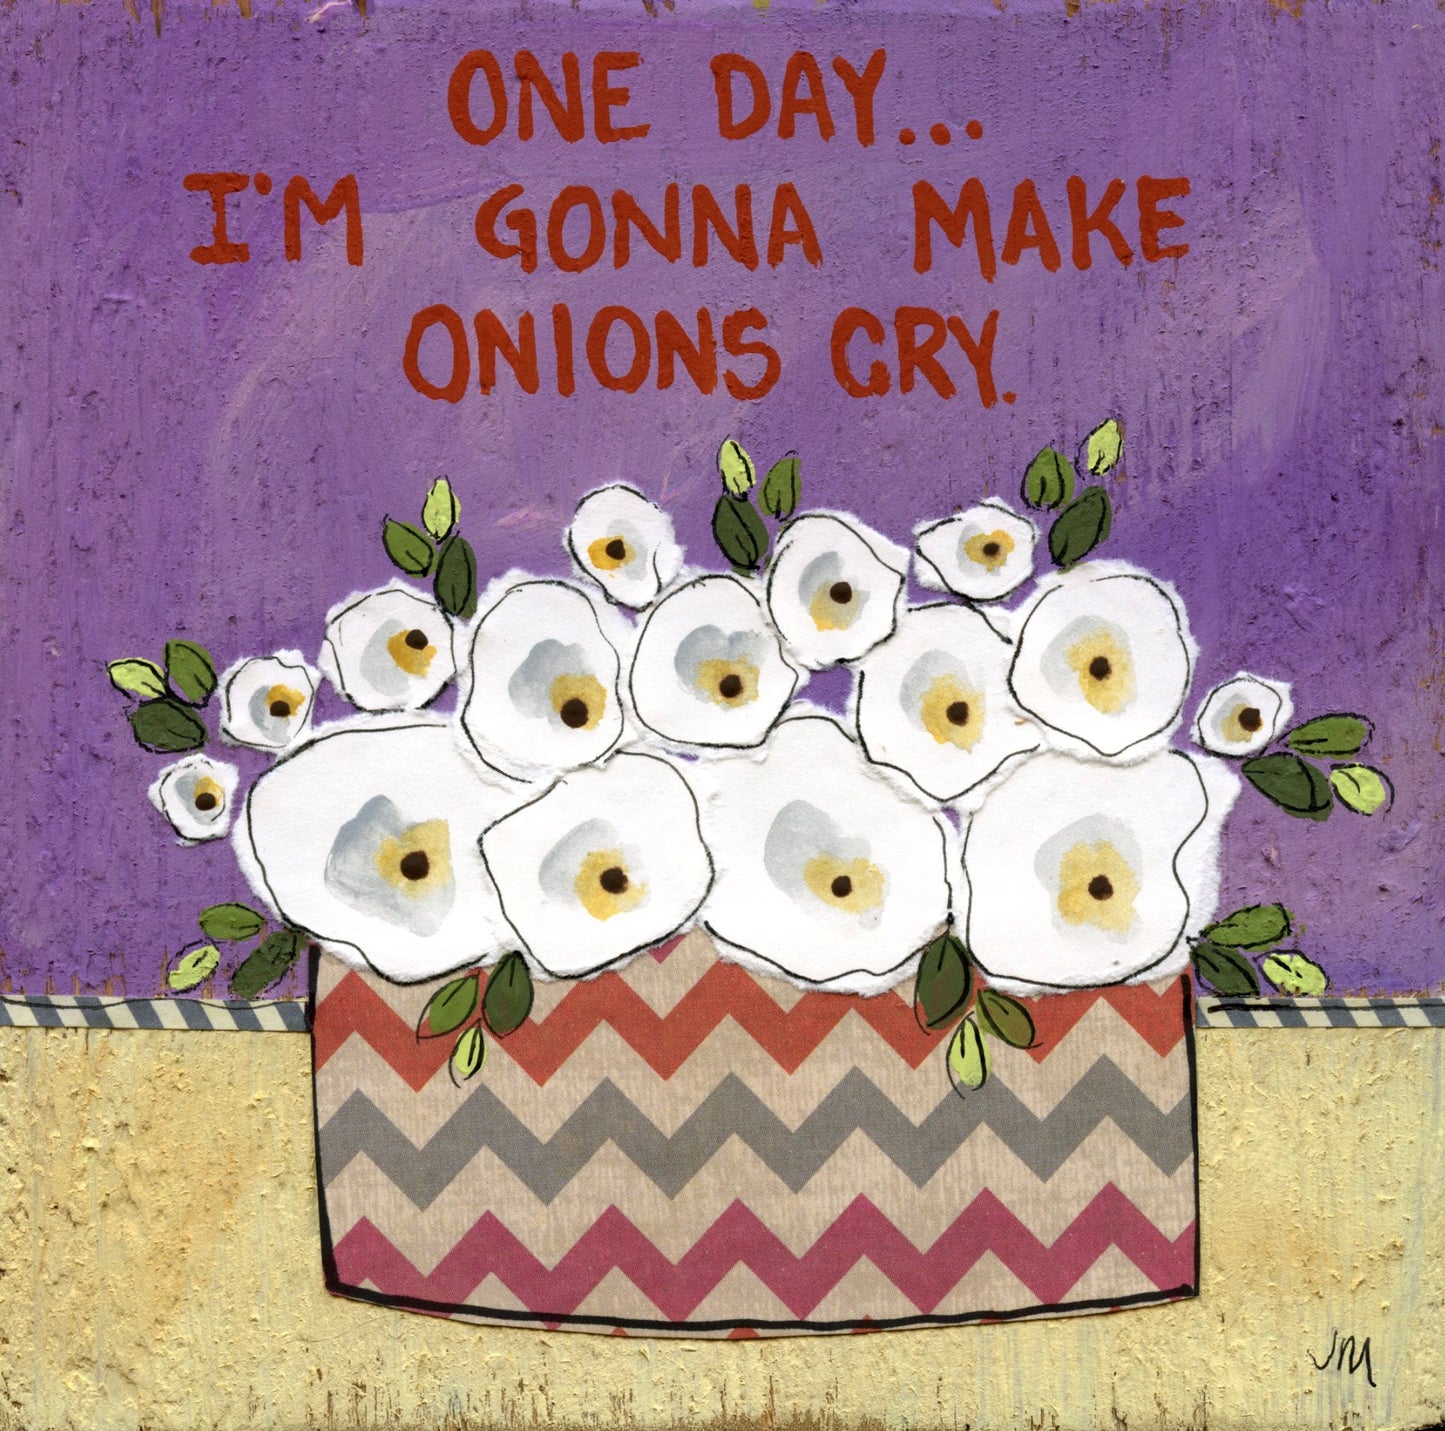 Onions Cry, art print